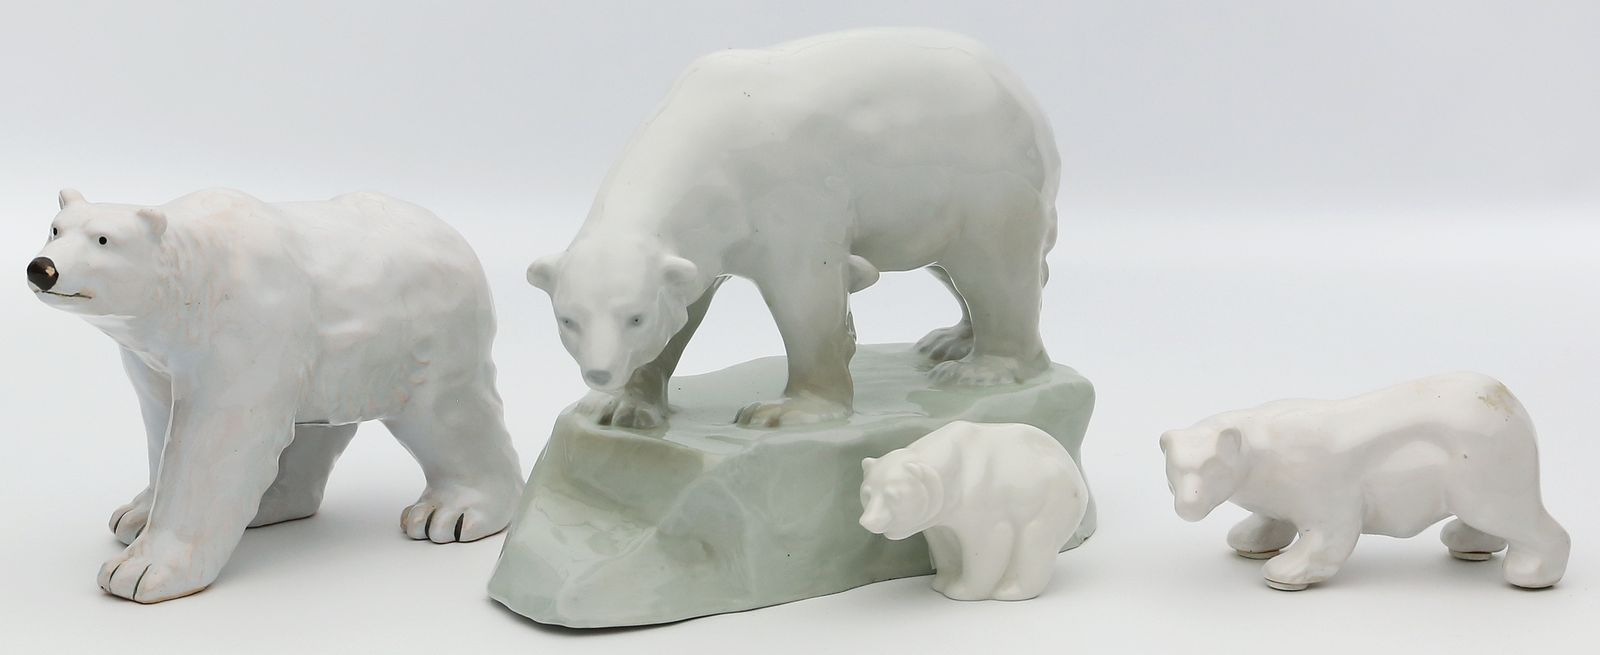 4 Skulpturen "Eisbären".